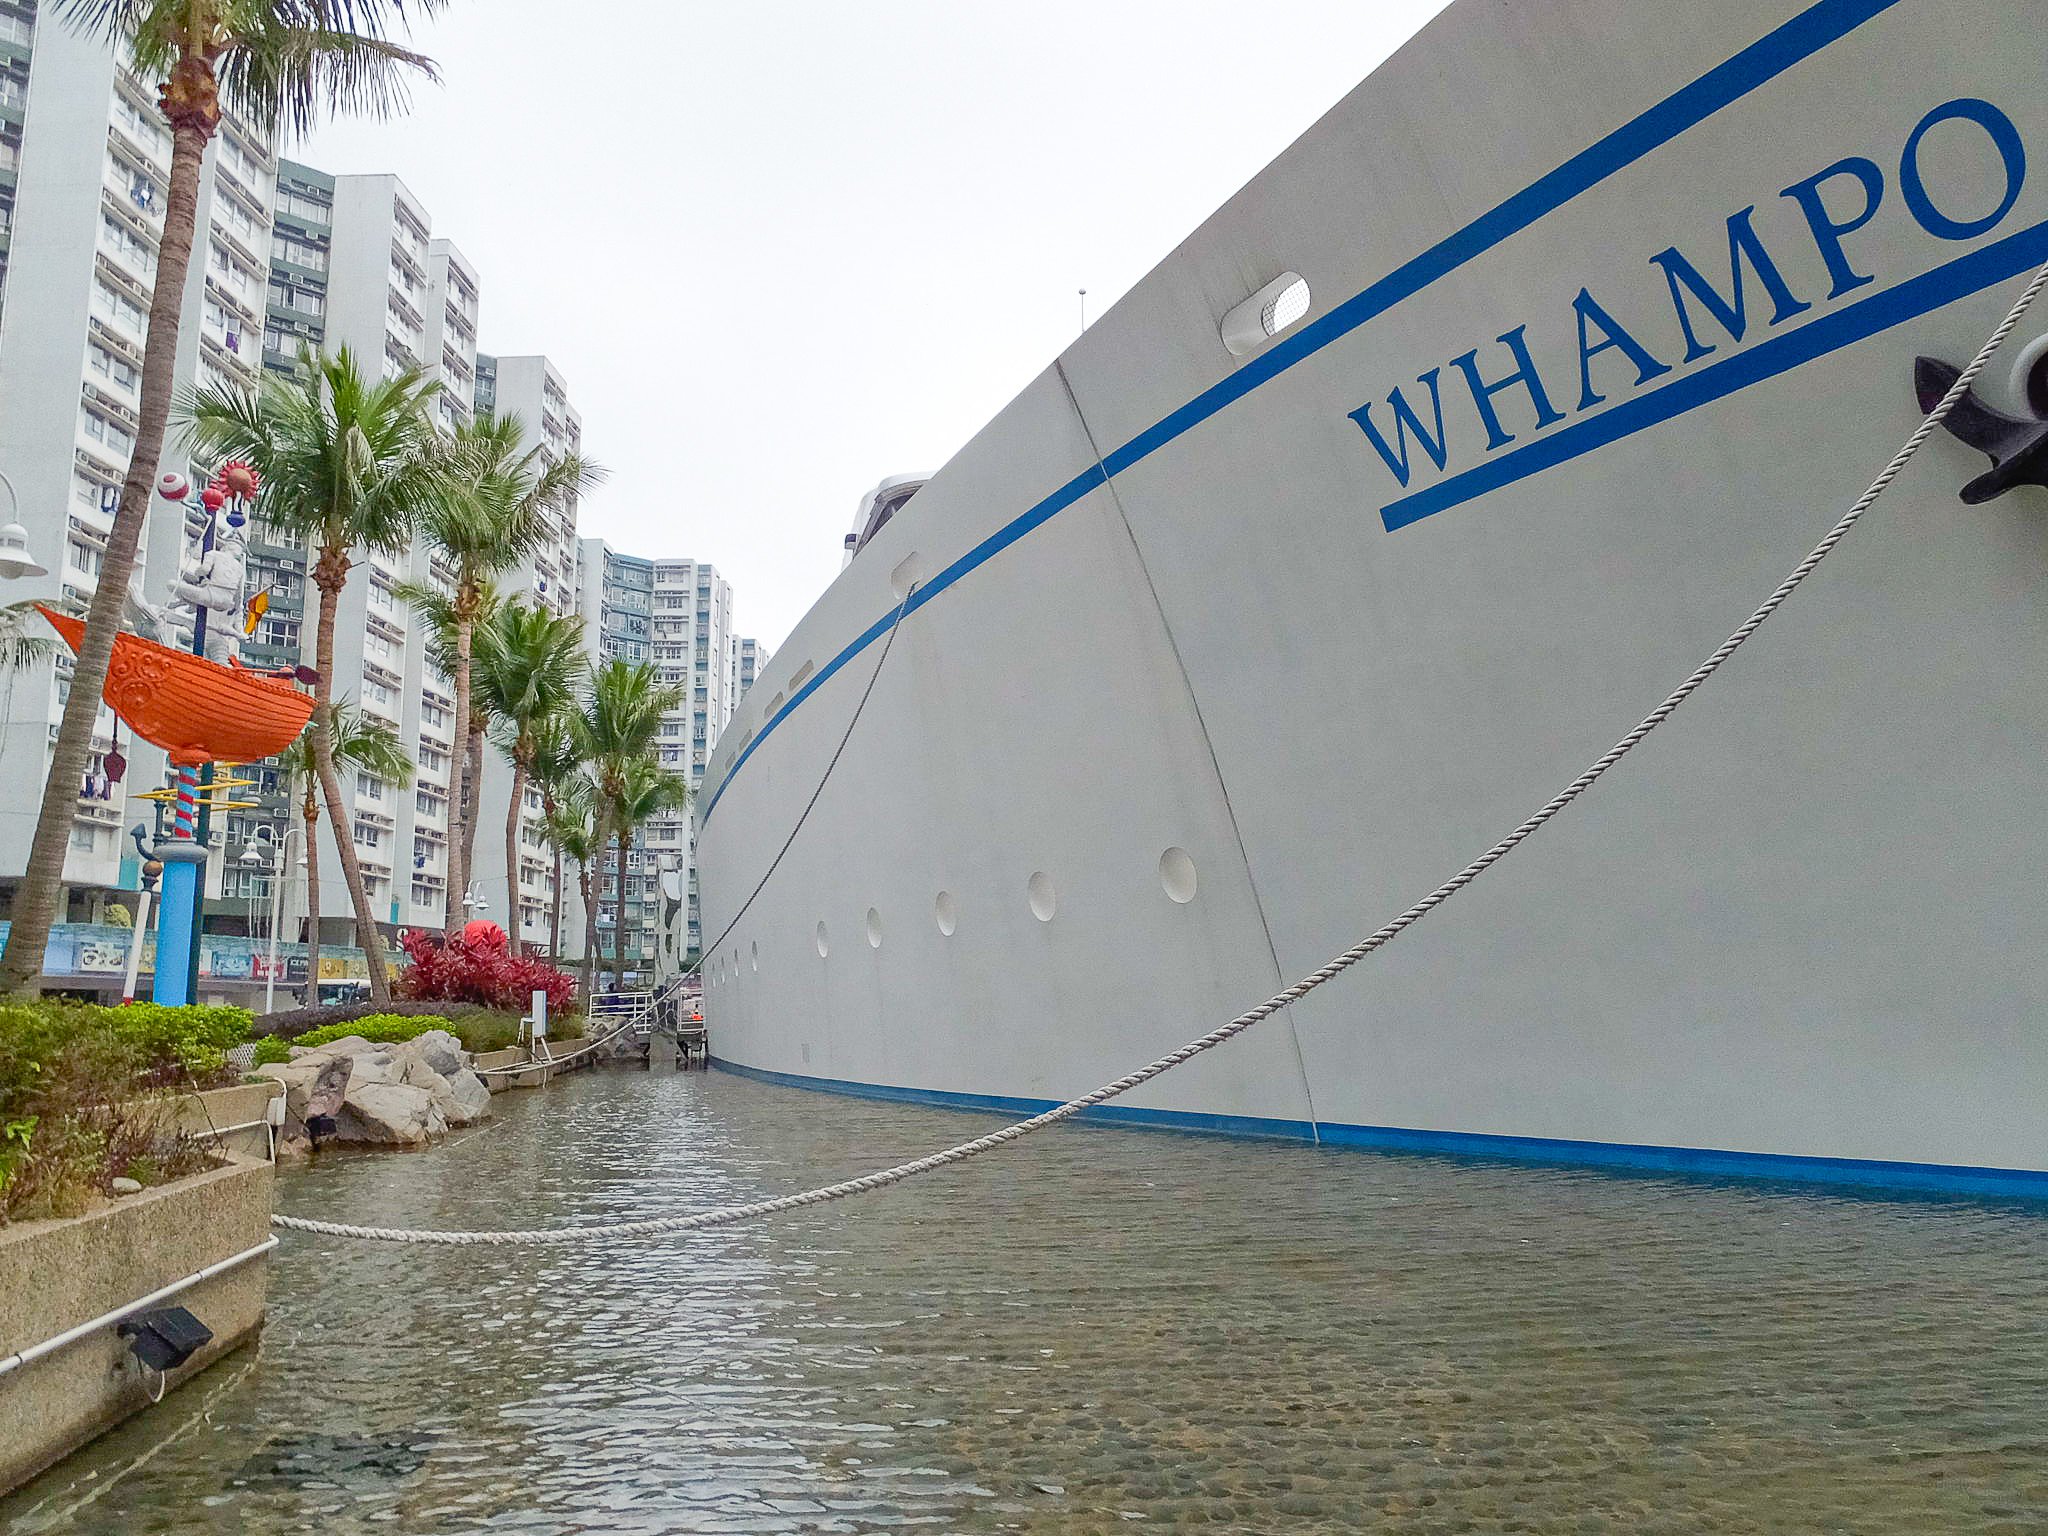 HONG KONG CRUISE SHIP SHOPPING MALL: The Whampoa